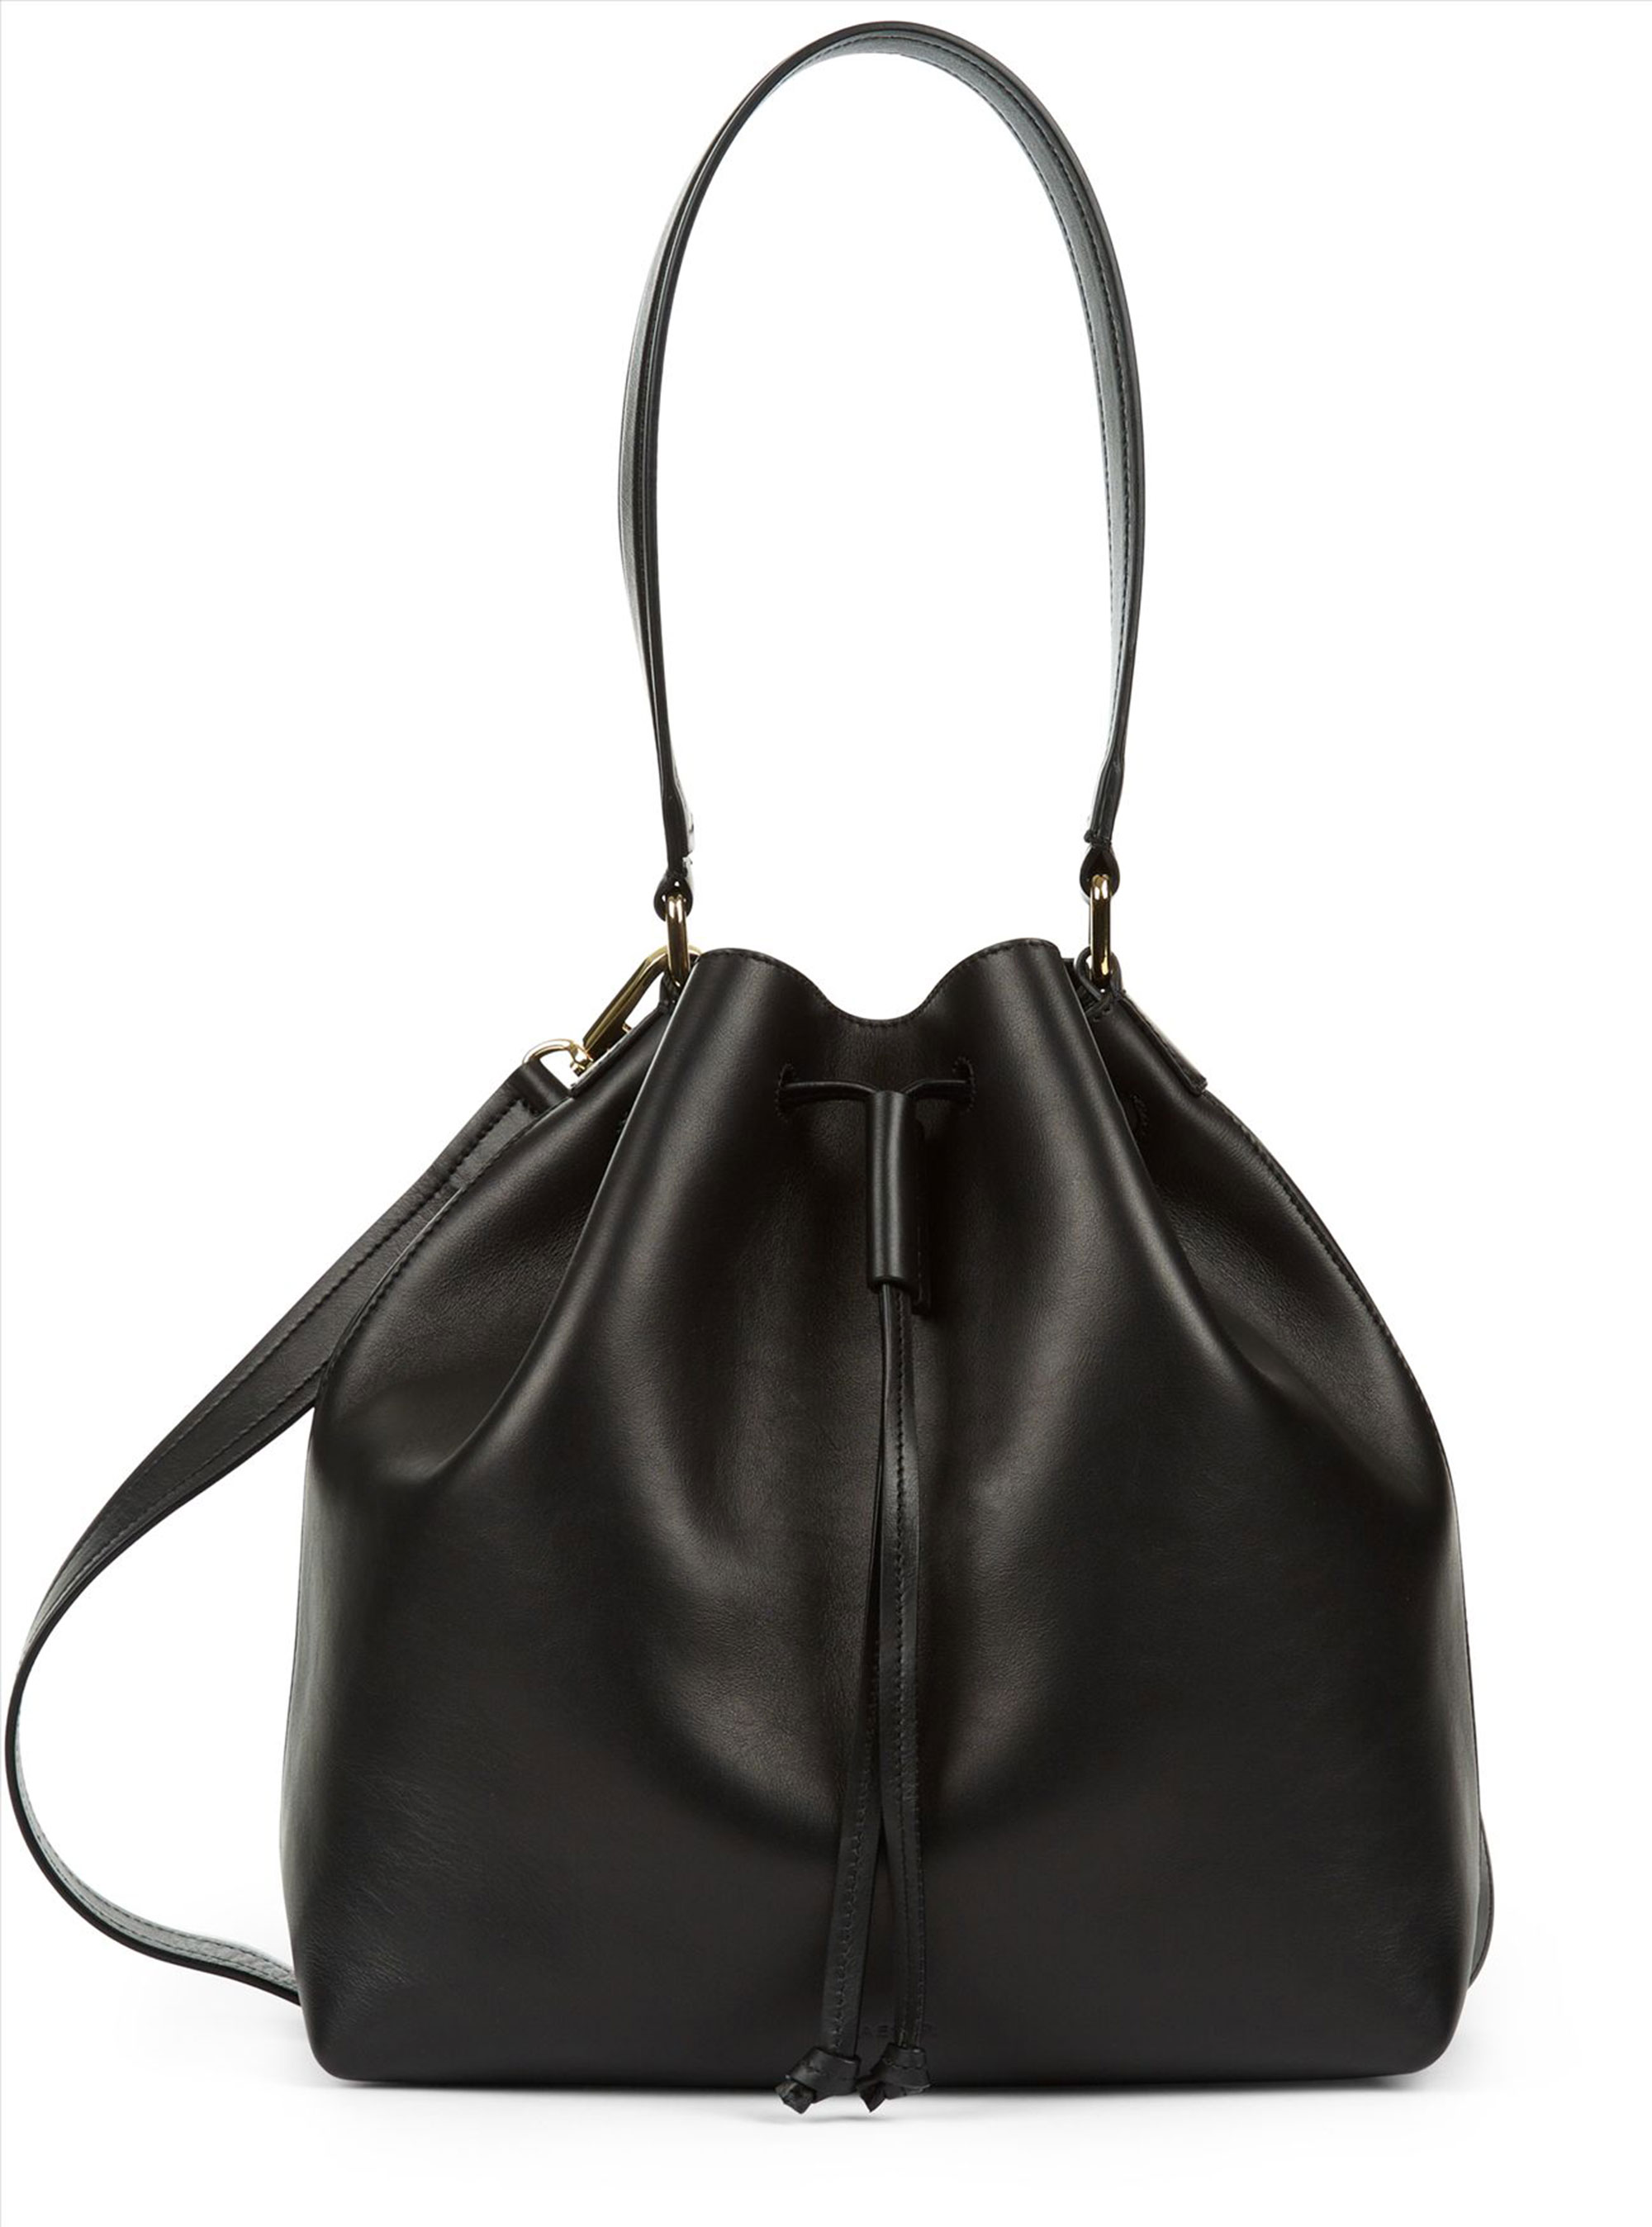 work bags for women - Oxford Leather Duffle Bag, £225, Jaegar - Woman ...